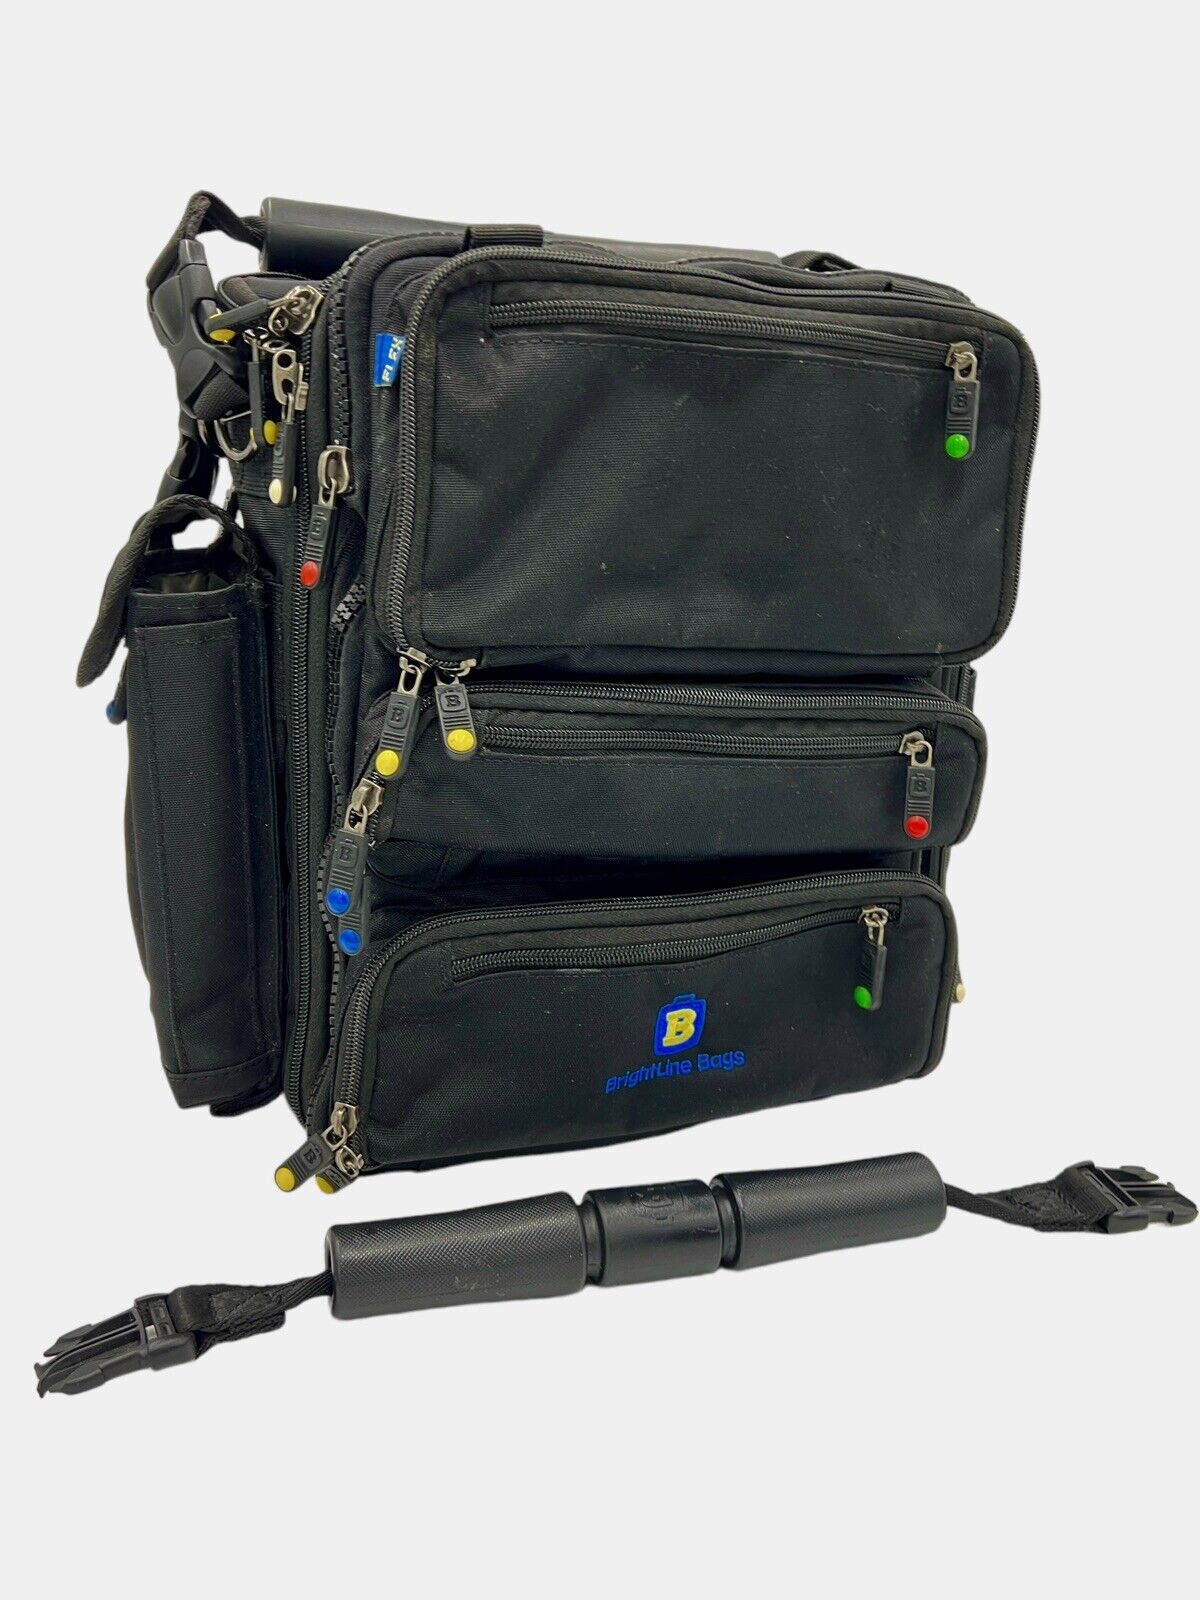 BRIGHTLINE Pilot Flight Bag Organizer  FLEX System B4 Travel Satchel Addable